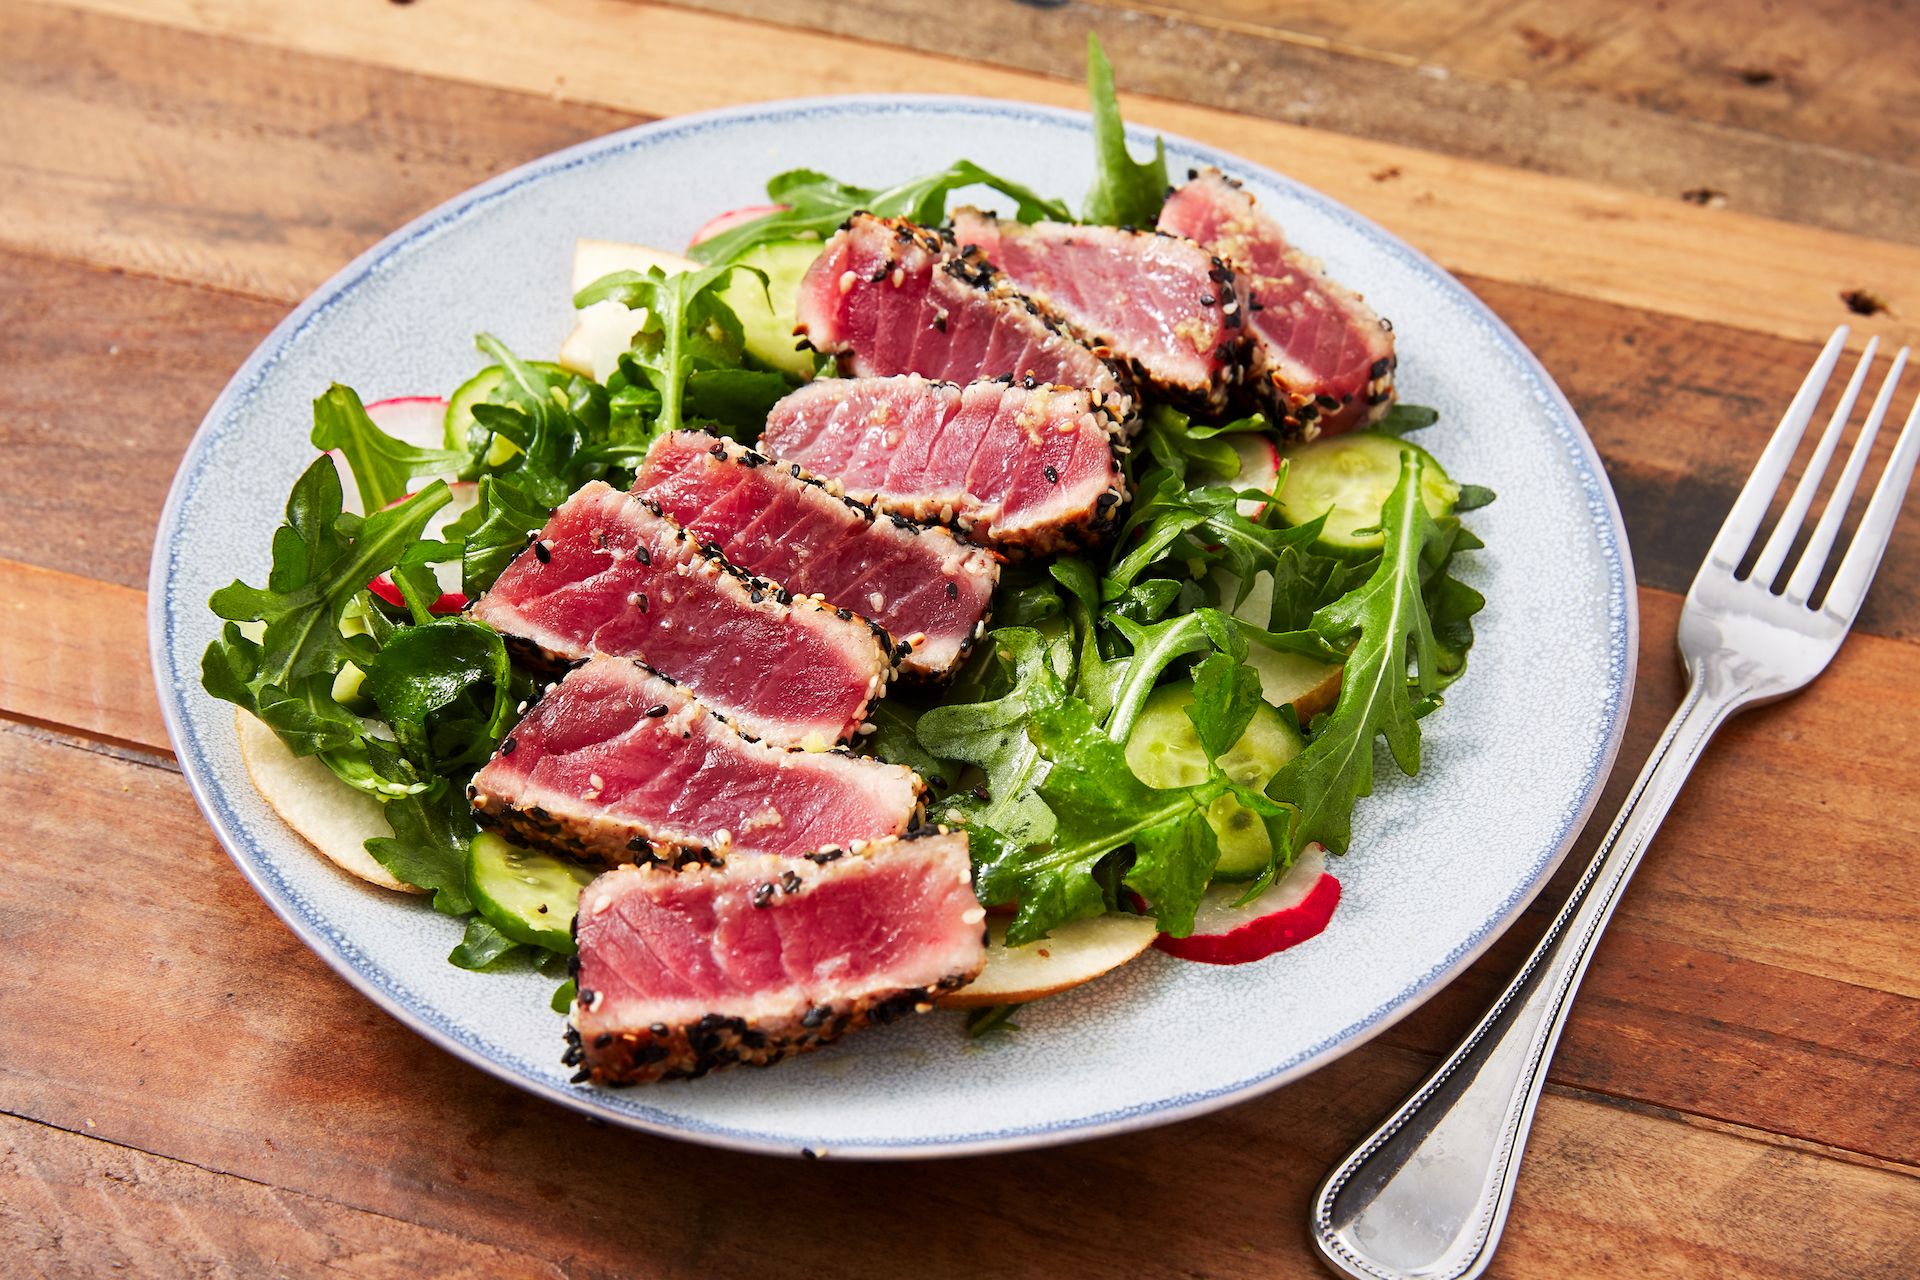 Seared Ahi Tuna Recipe How To Make Ahi Tuna Steak With Arugula Salad